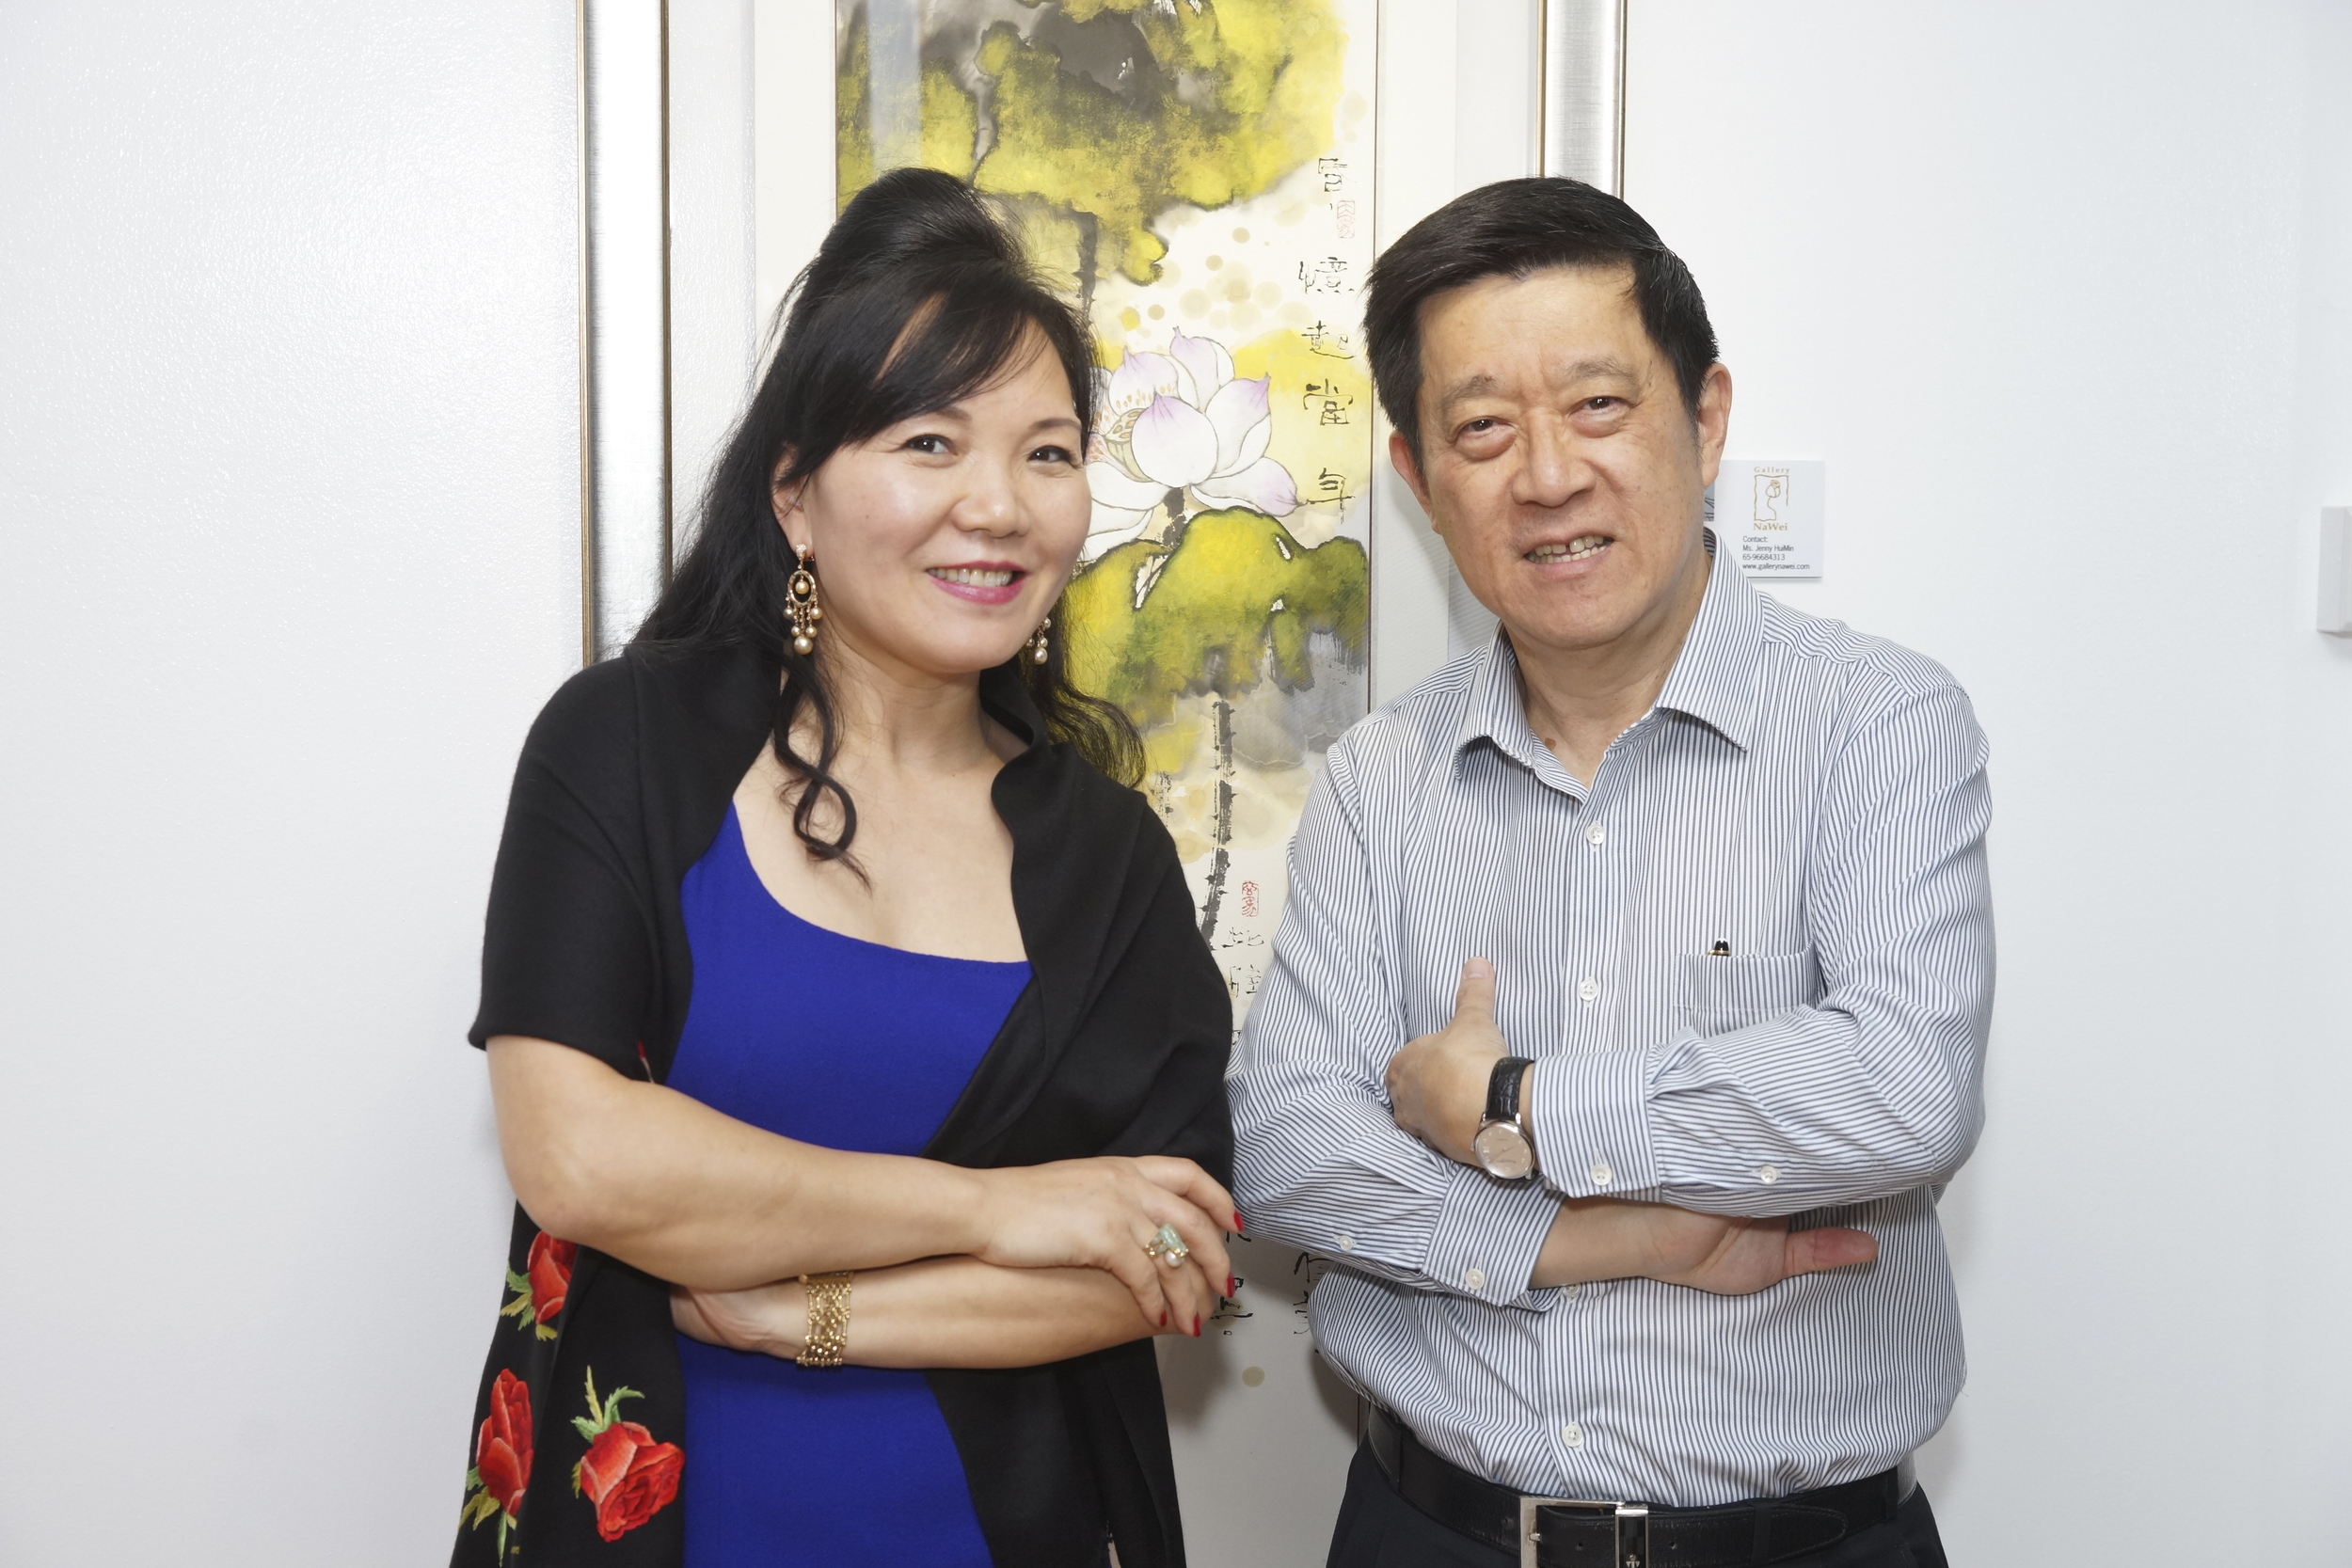 Jenny Zhu HuiMin , Mr. Choo Thiam Siew 0- President of NAFA.jpg